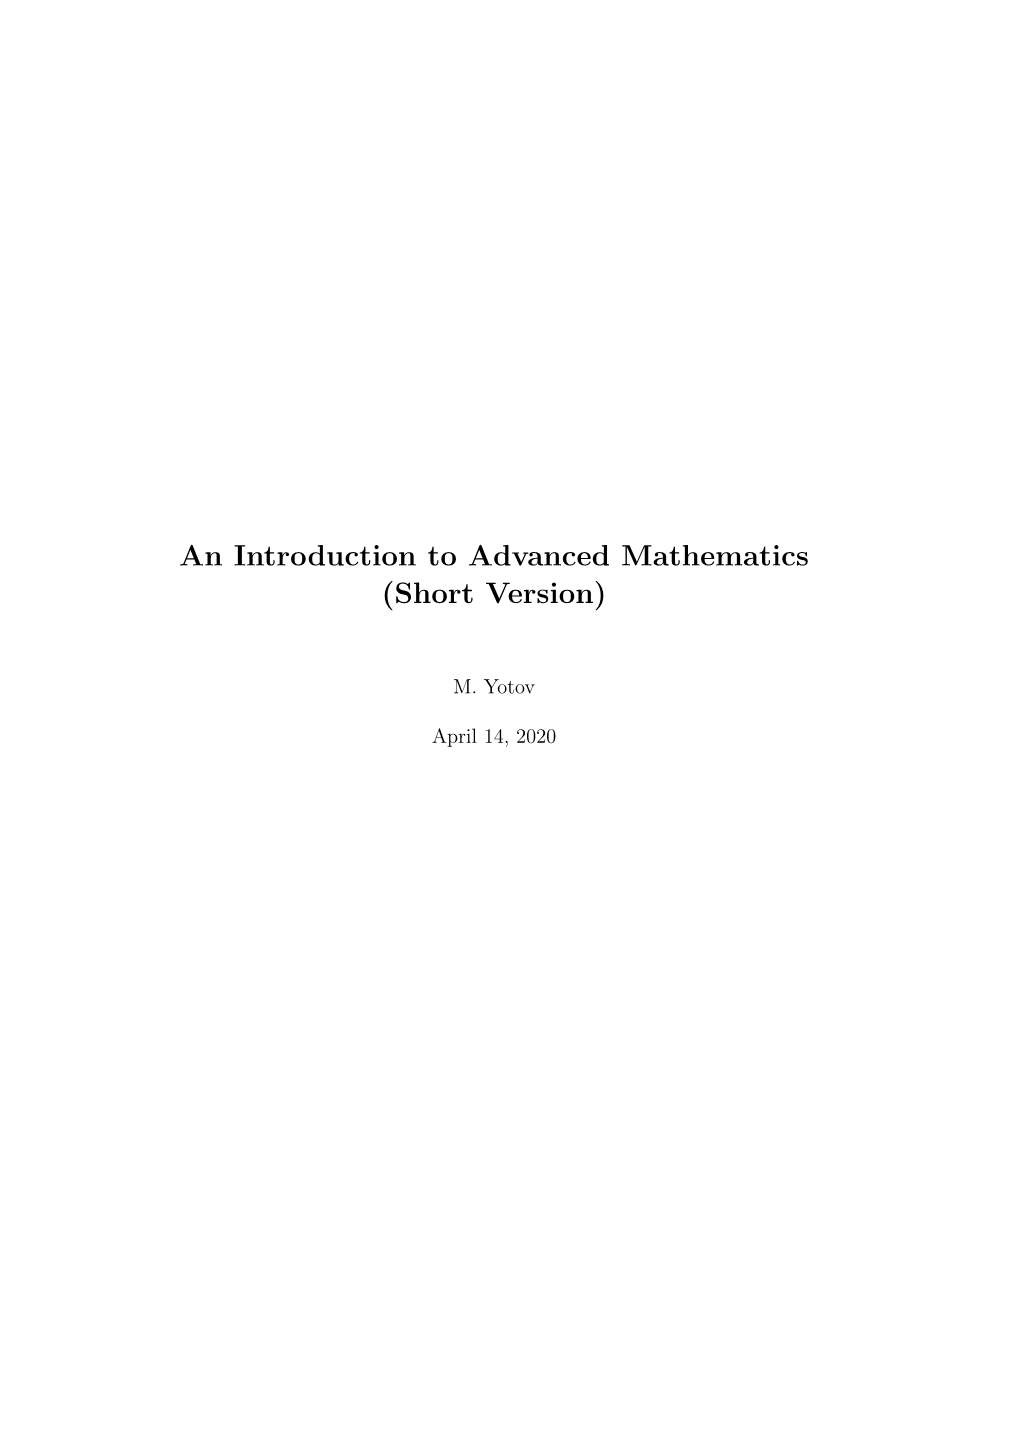 An Introduction to Advanced Mathematics (Short Version)